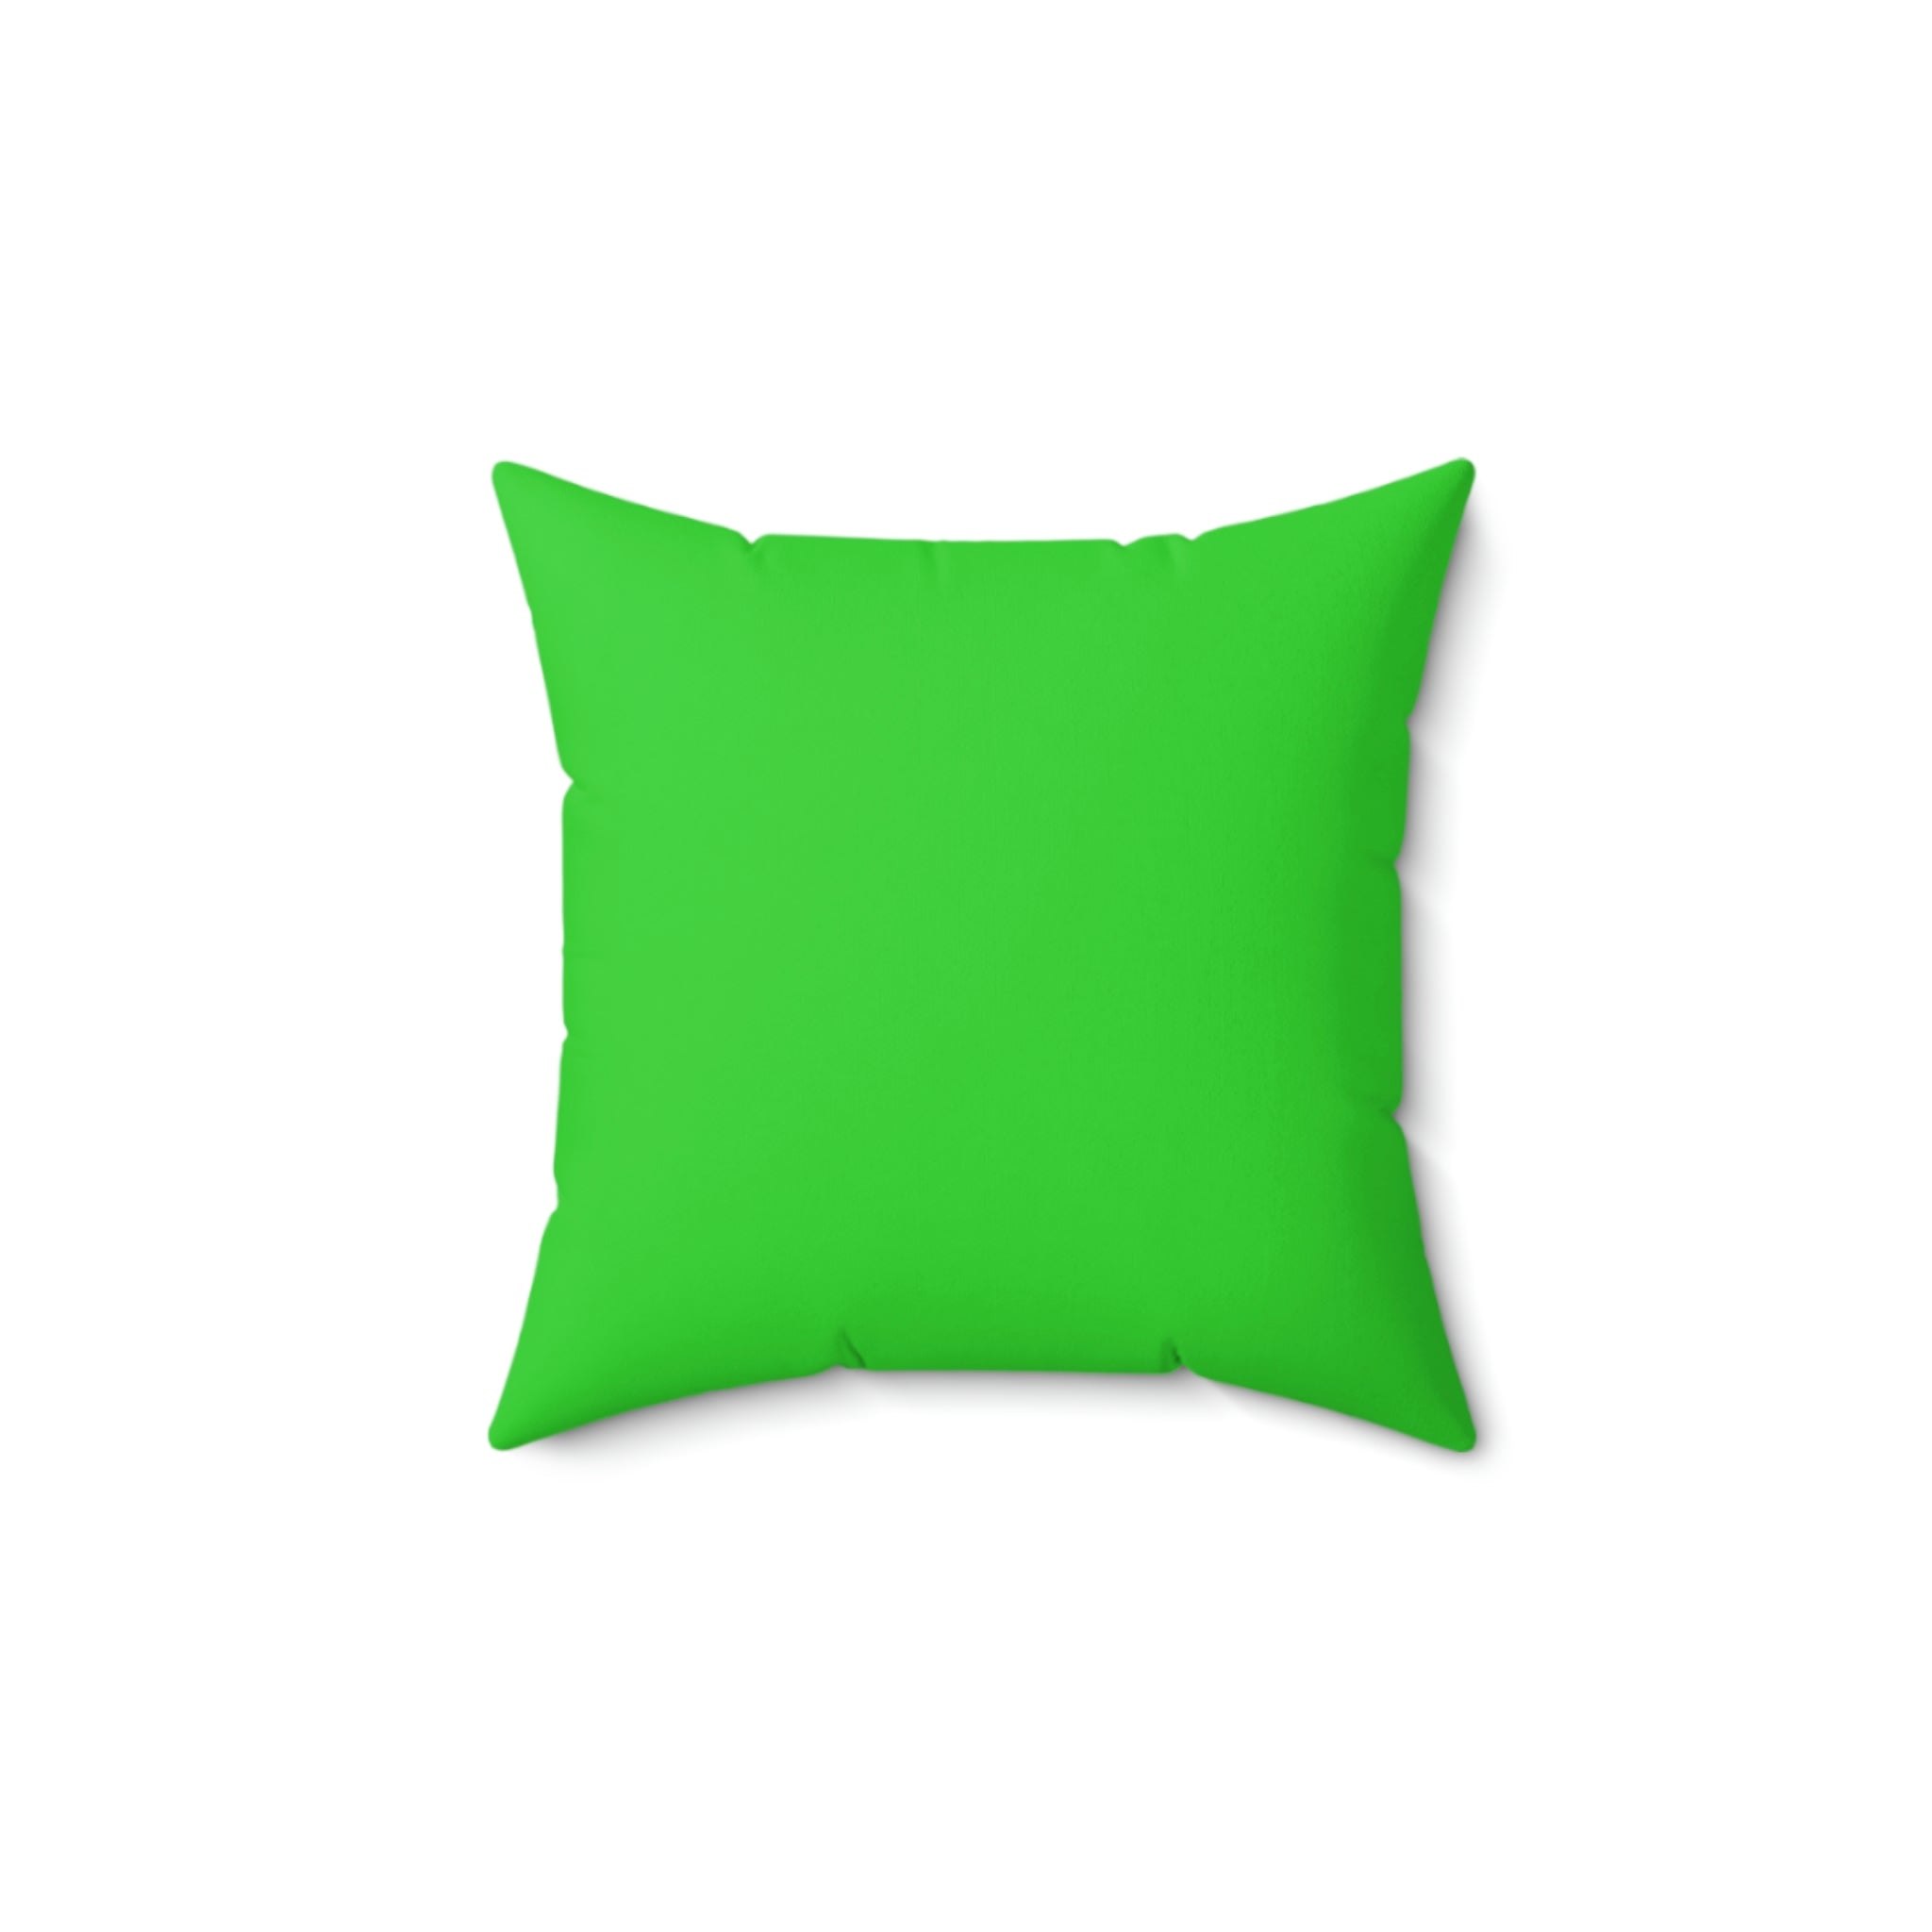 Kissen aus gesponnenem Polyester Jack grün